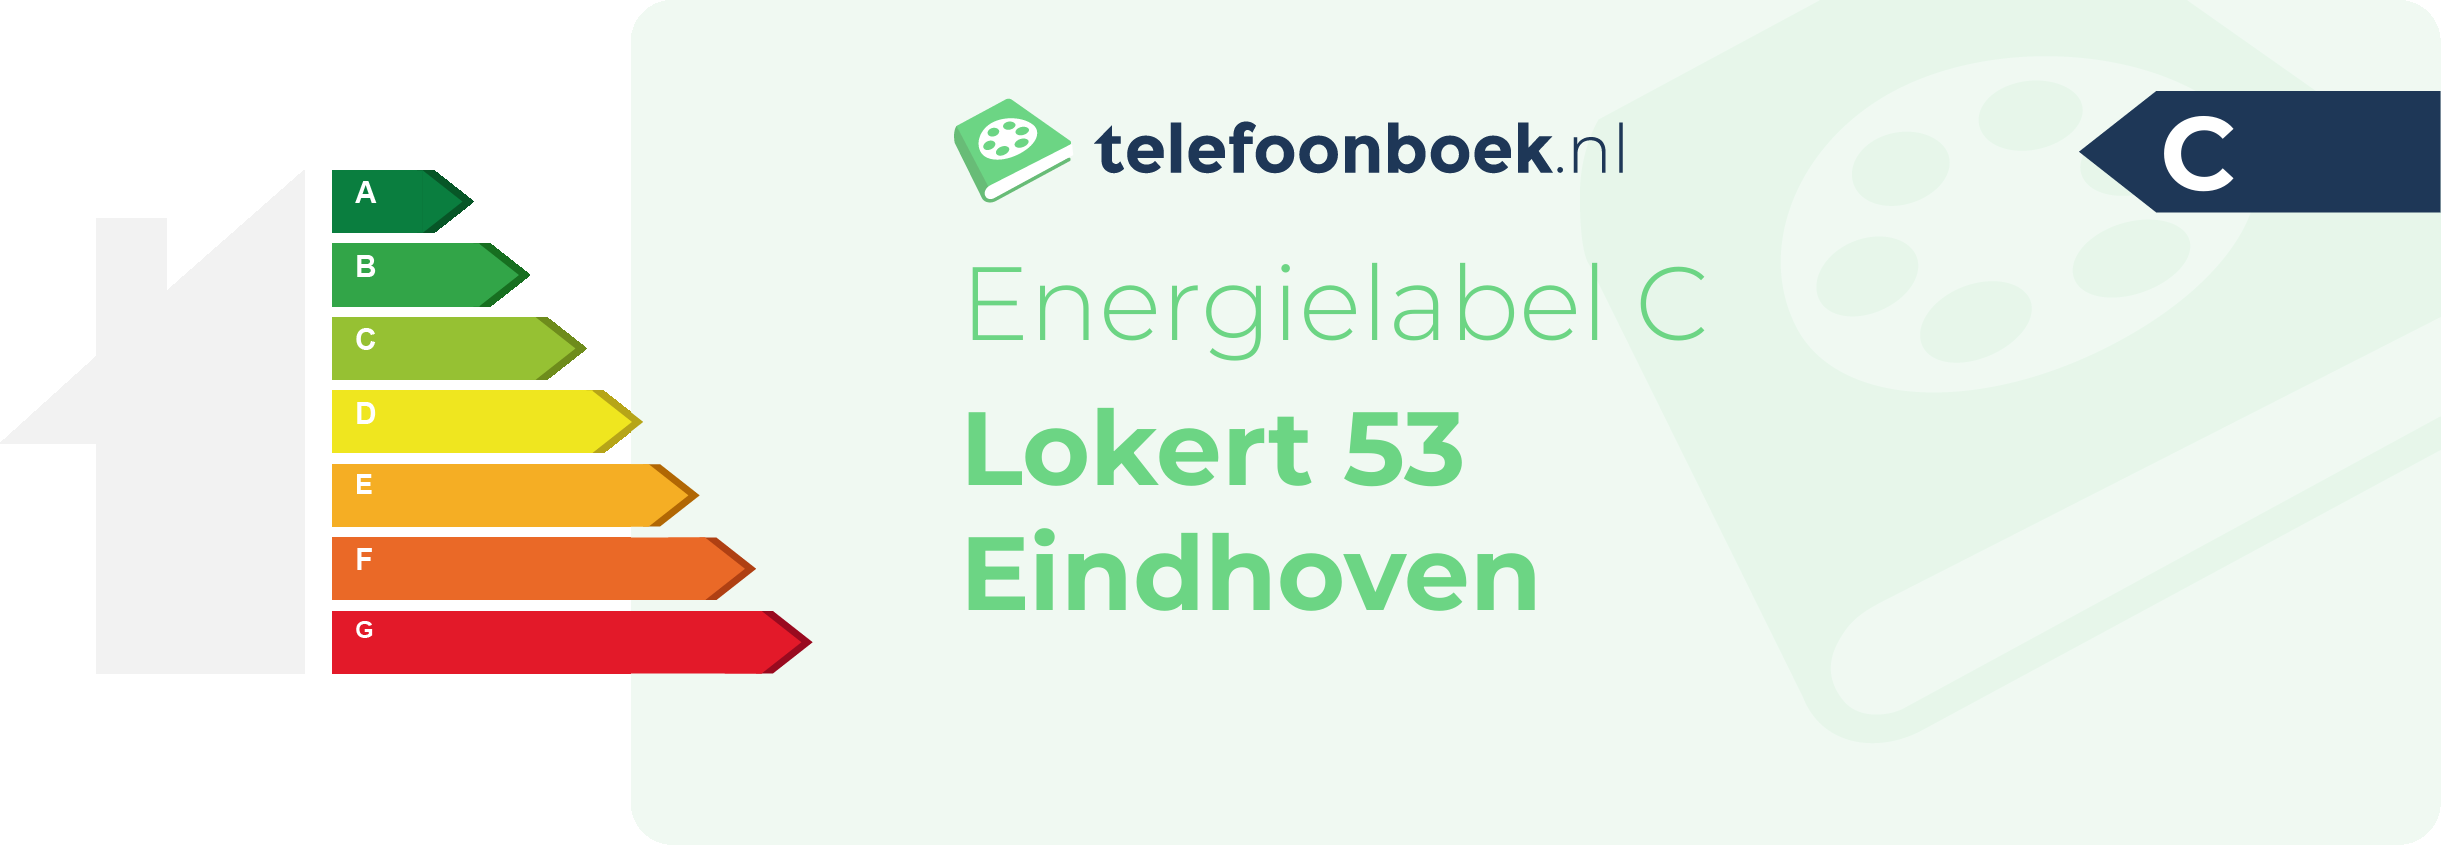 Energielabel Lokert 53 Eindhoven